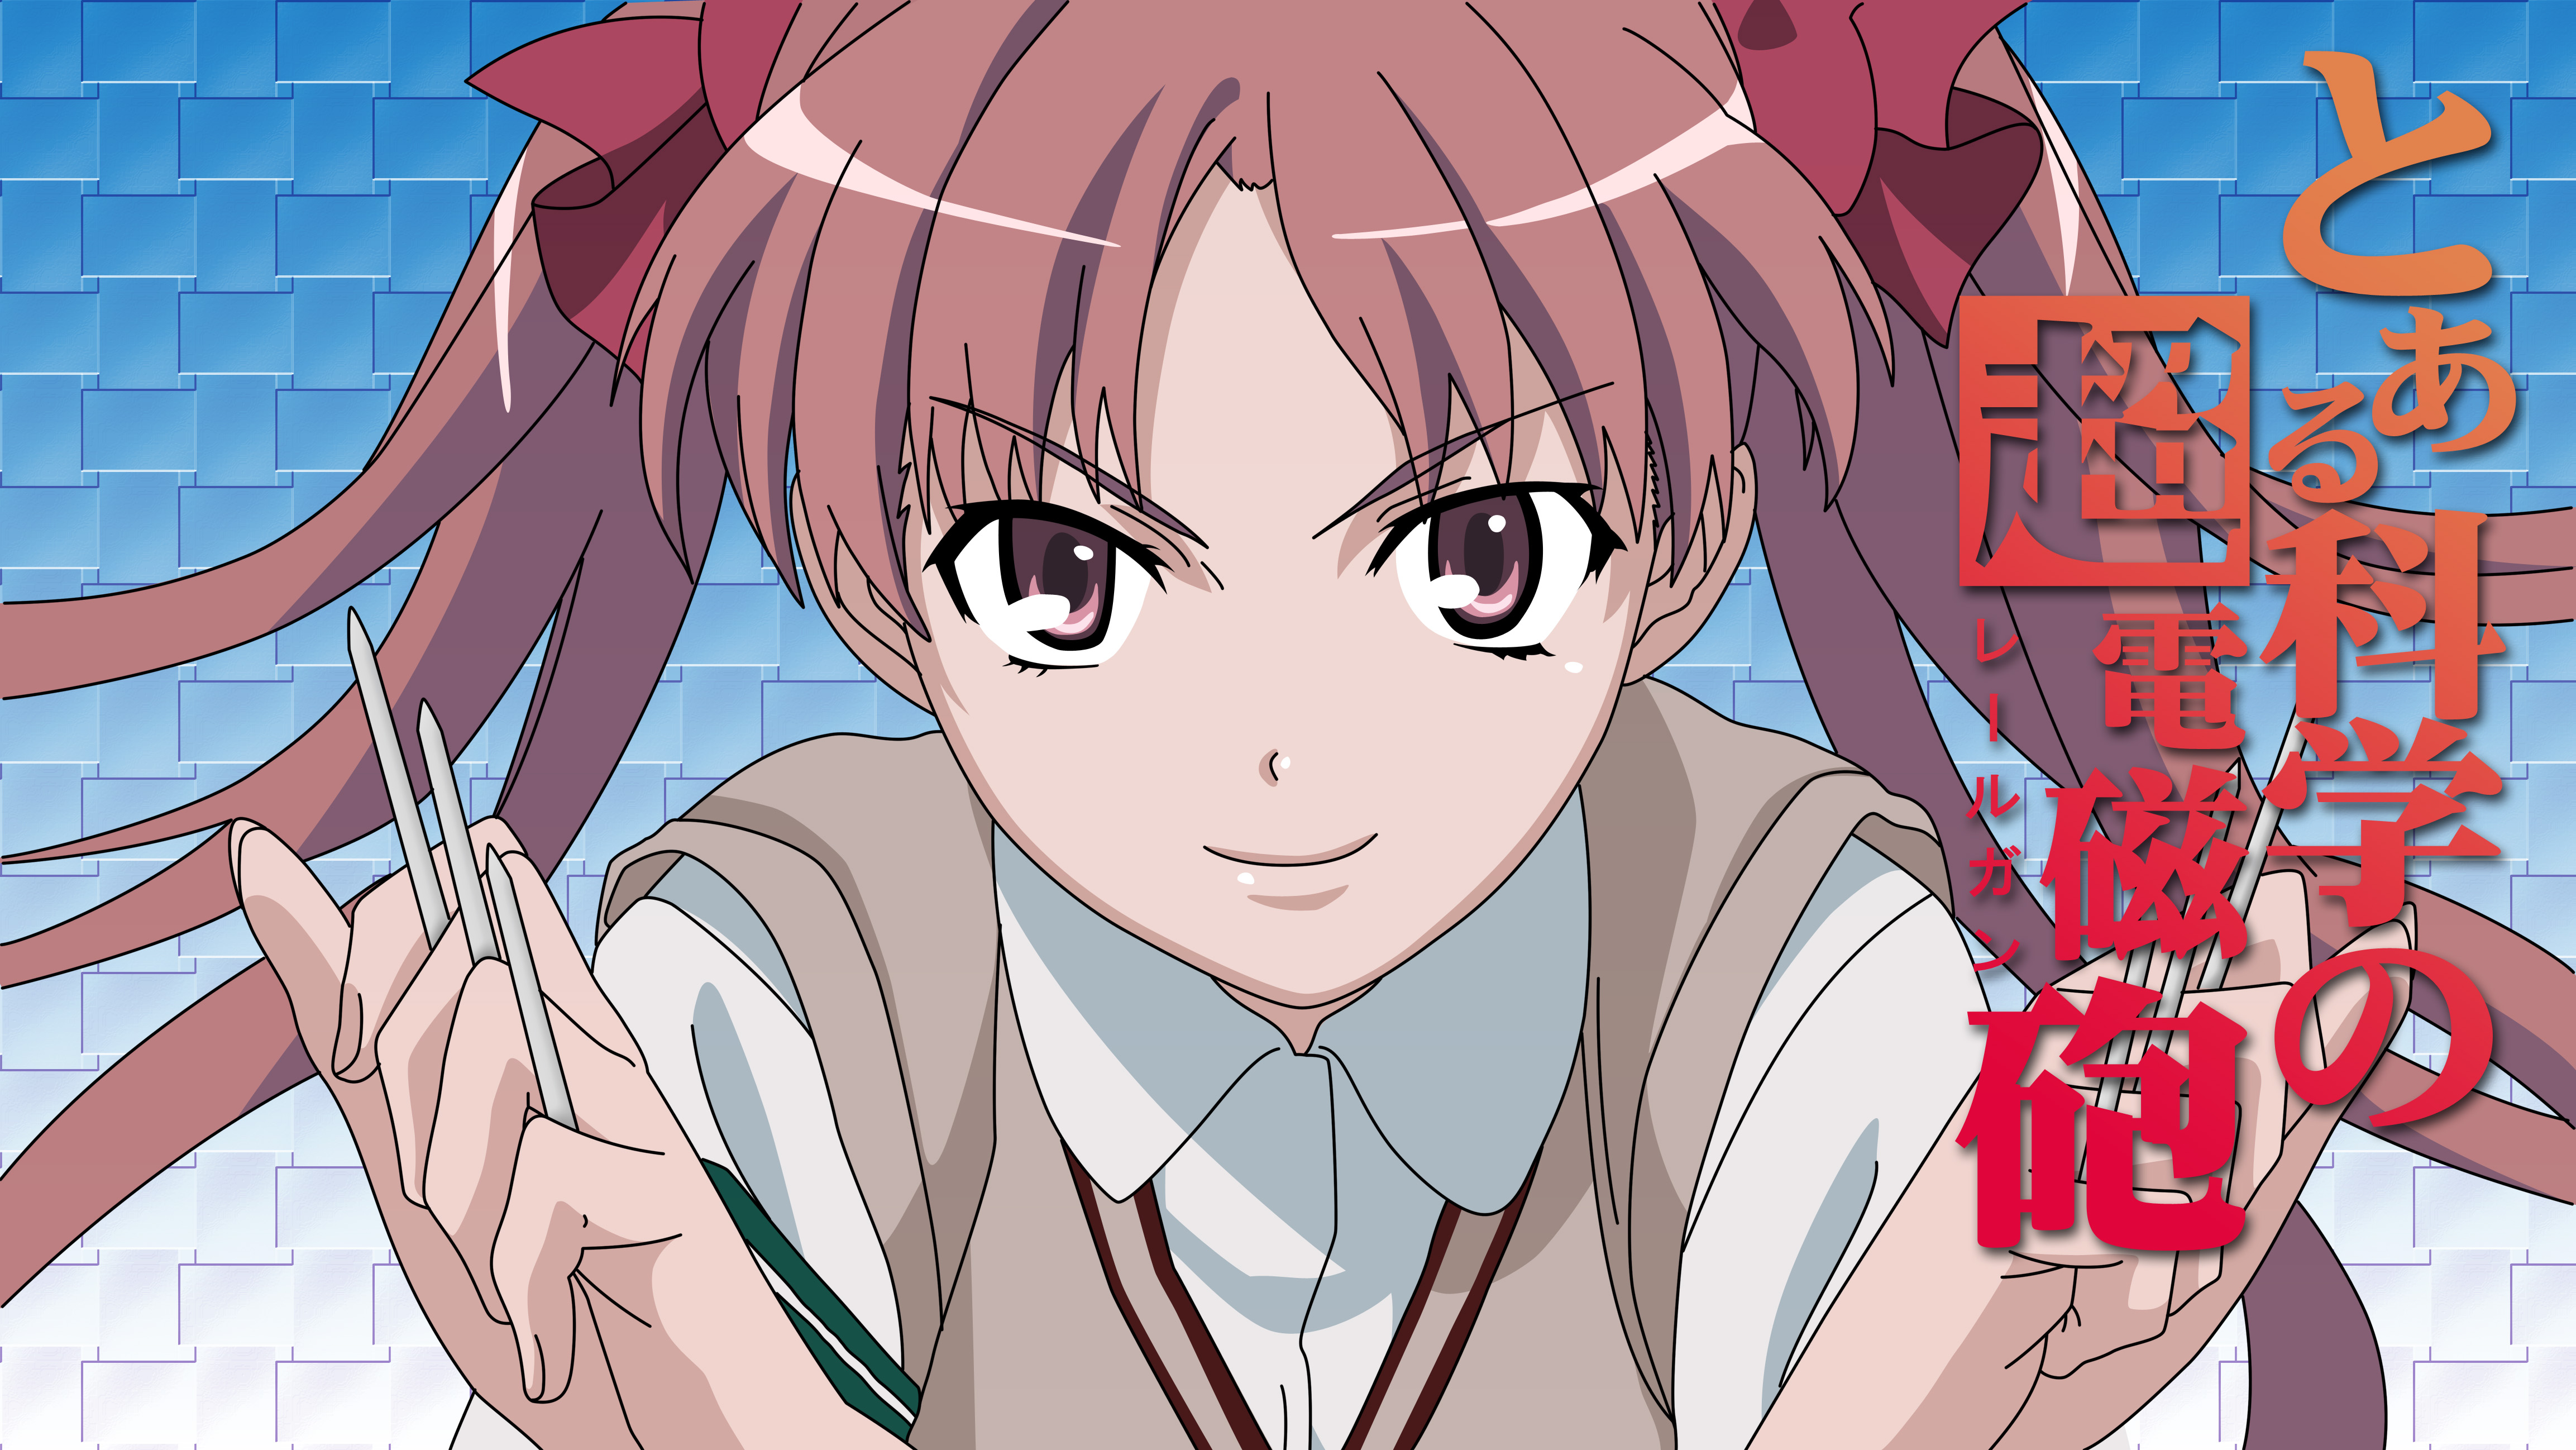 Descarga gratis la imagen Animado, Kuroko Shirai, To Aru Kagaku No Railgun, To Aru Magical Index en el escritorio de tu PC